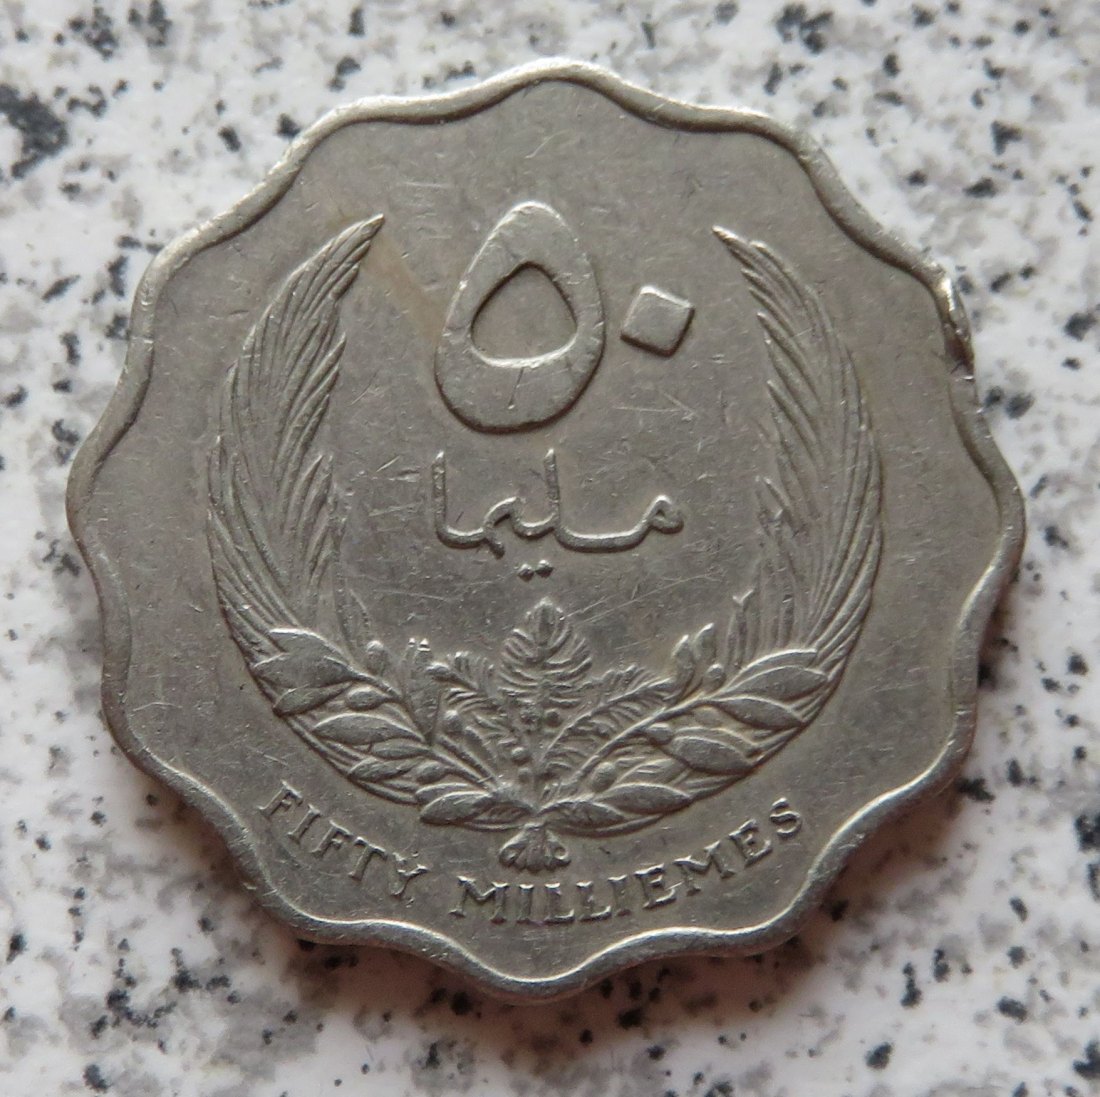  Libyen 50 Milliemes 1965 / AH 1385   